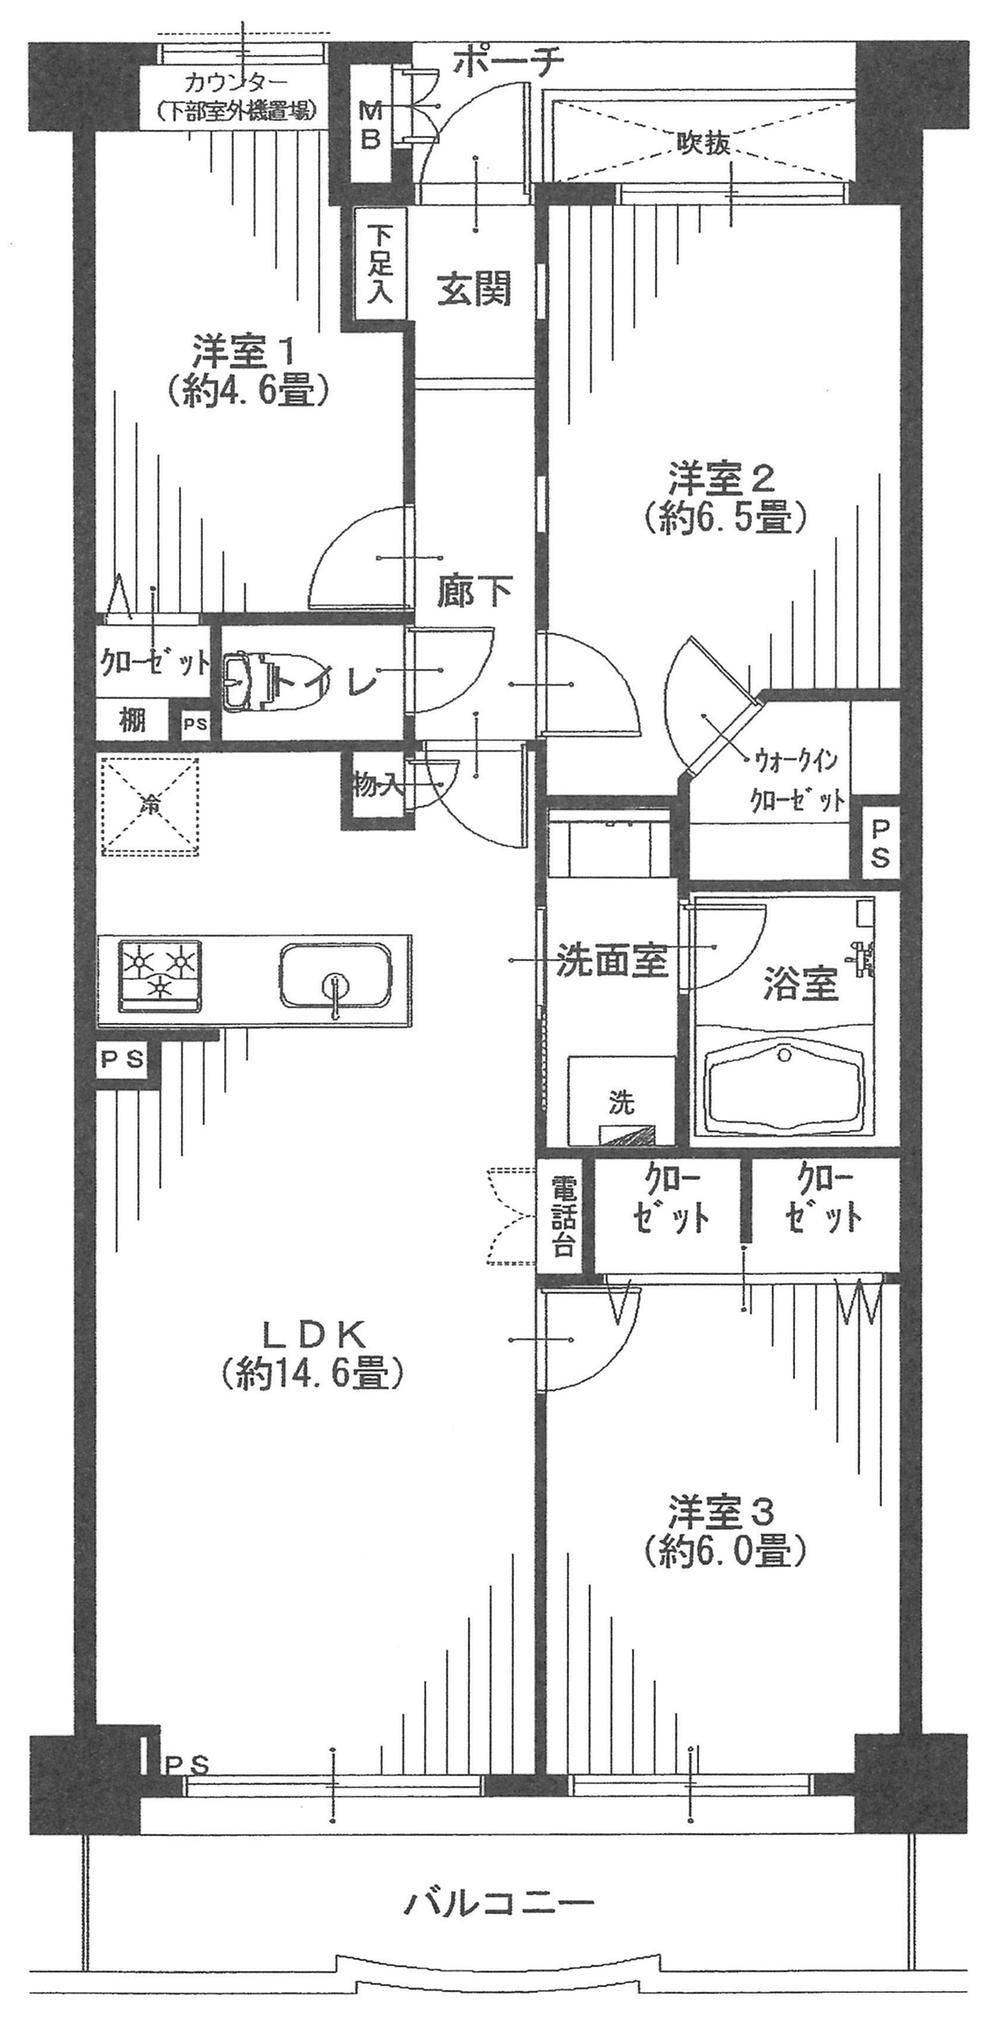 Floor plan. 3LDK, Price 36,900,000 yen, Footprint 70.1 sq m , 3LDK of balcony area 8.31 sq m LDK about 14.6 Pledge